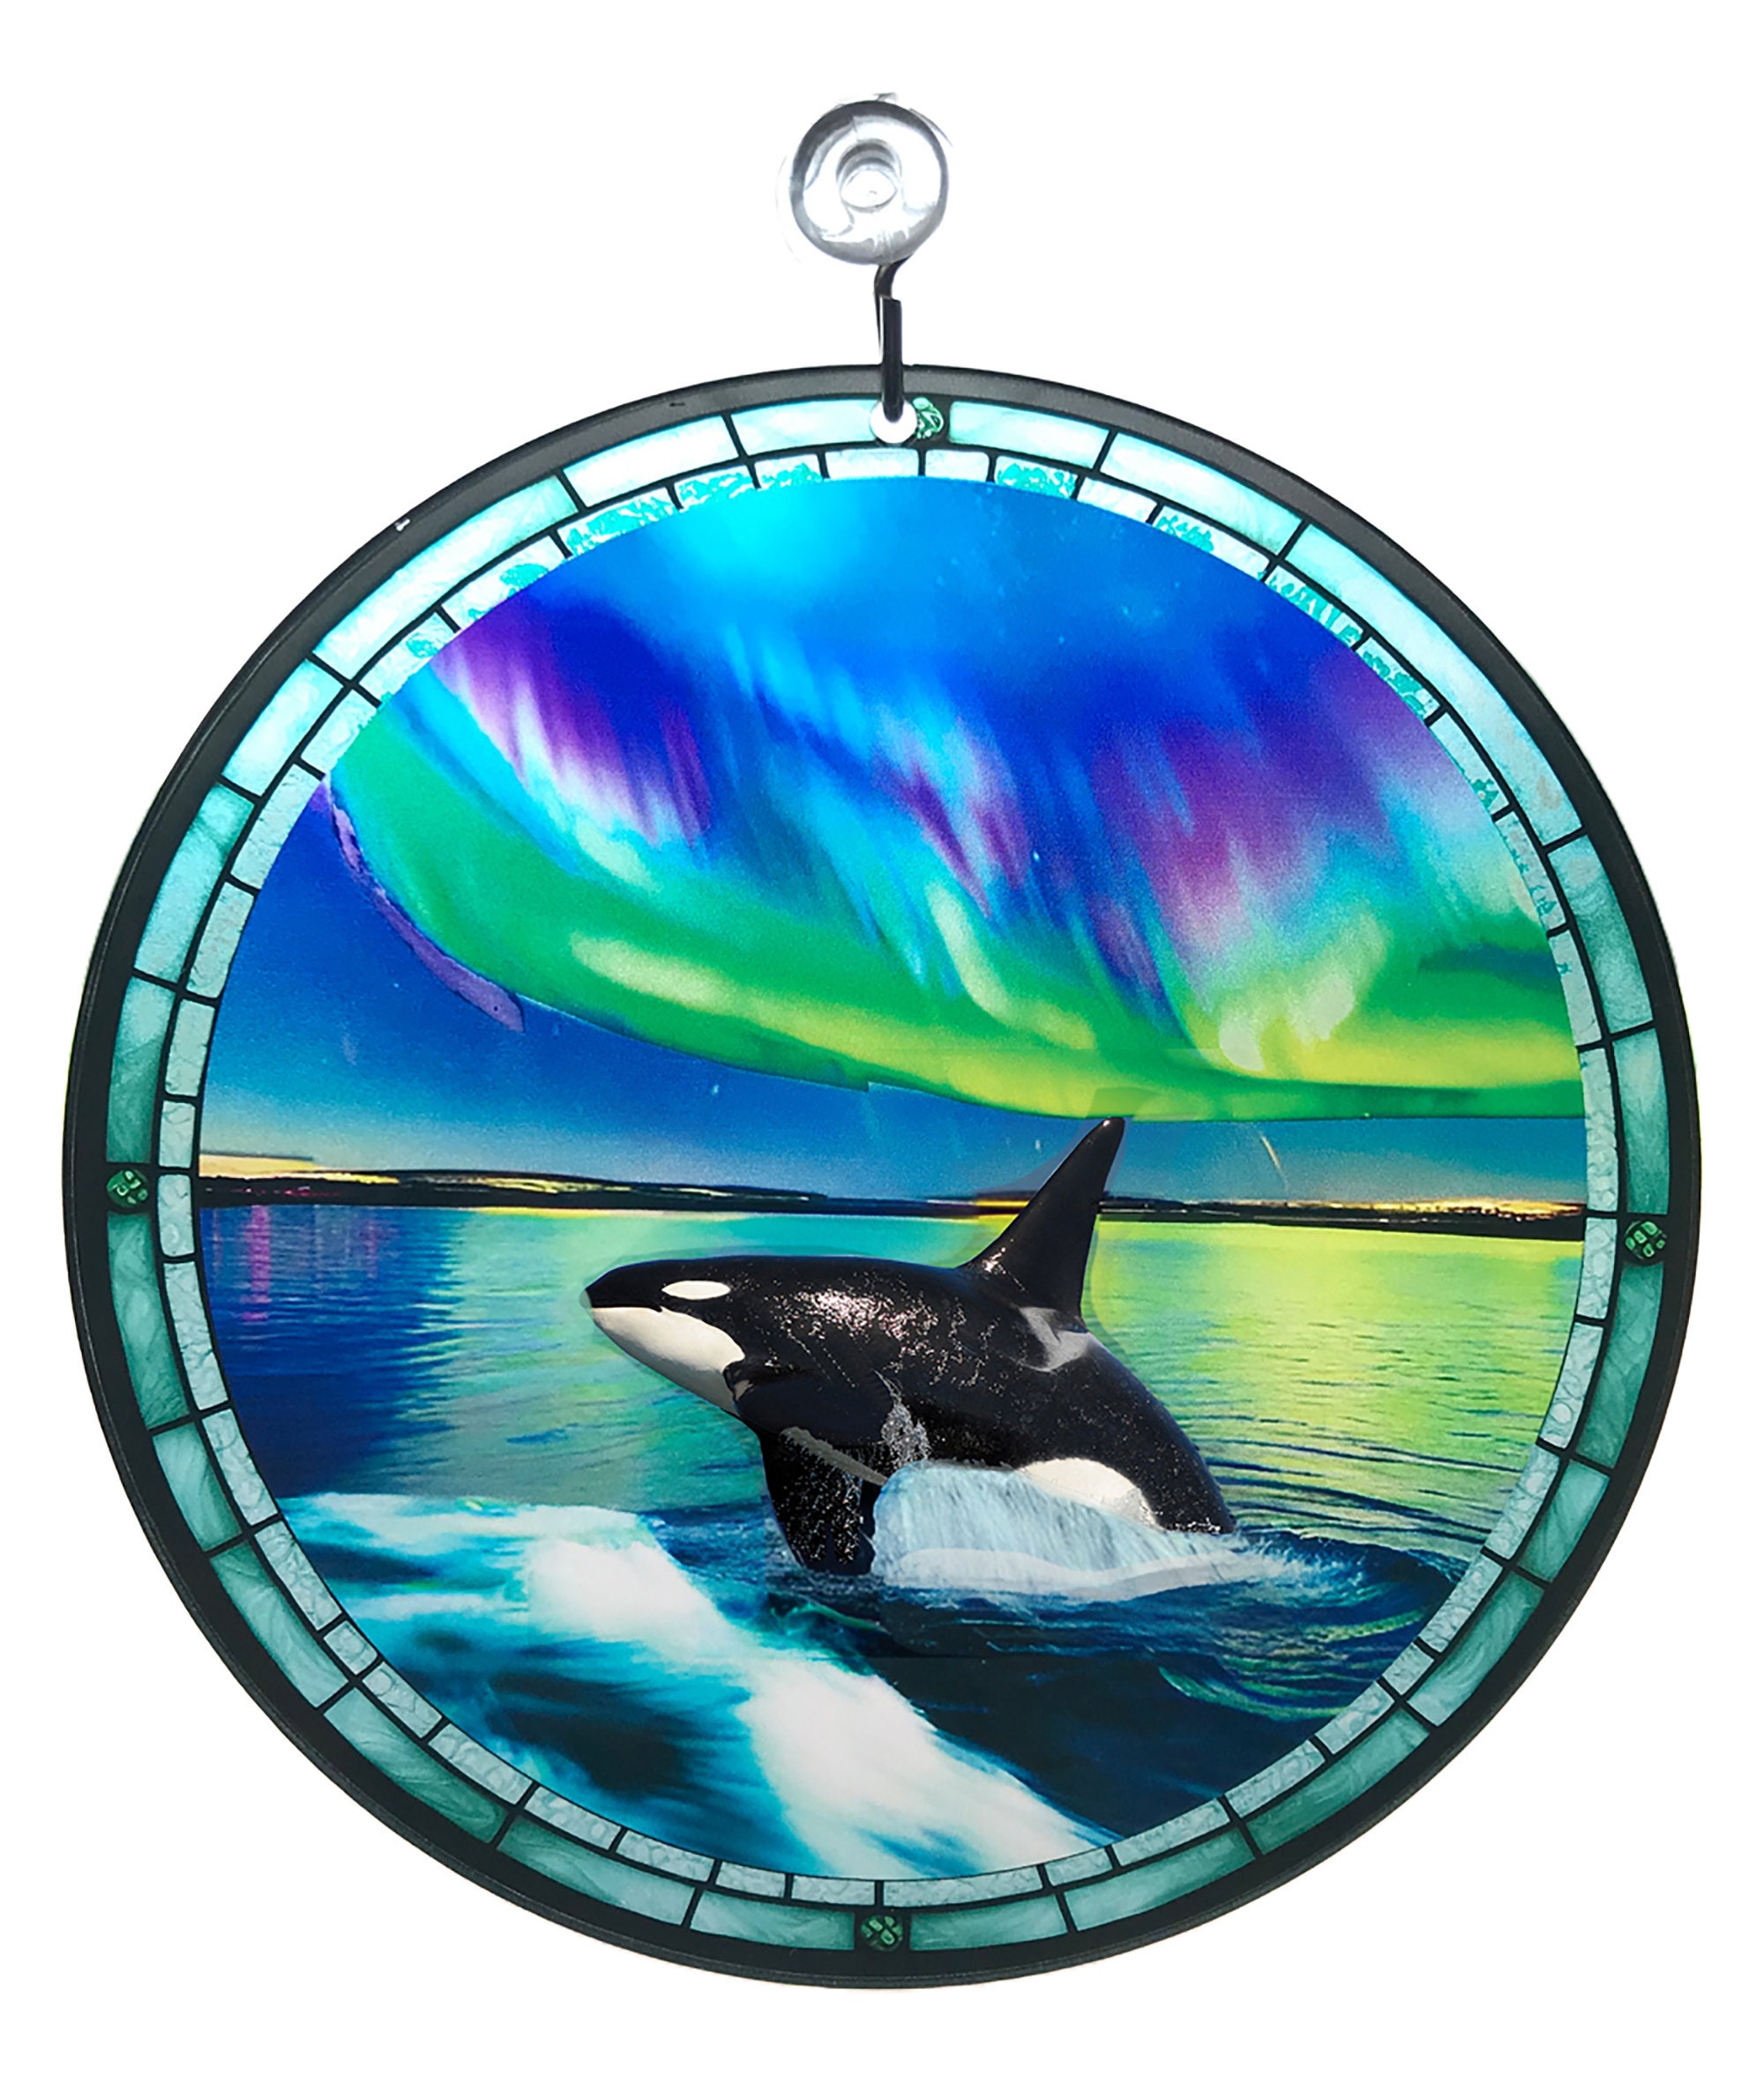 Shimmer Breaching Orca Killer Whale Thermos Tumbler 18 Oz. Gift